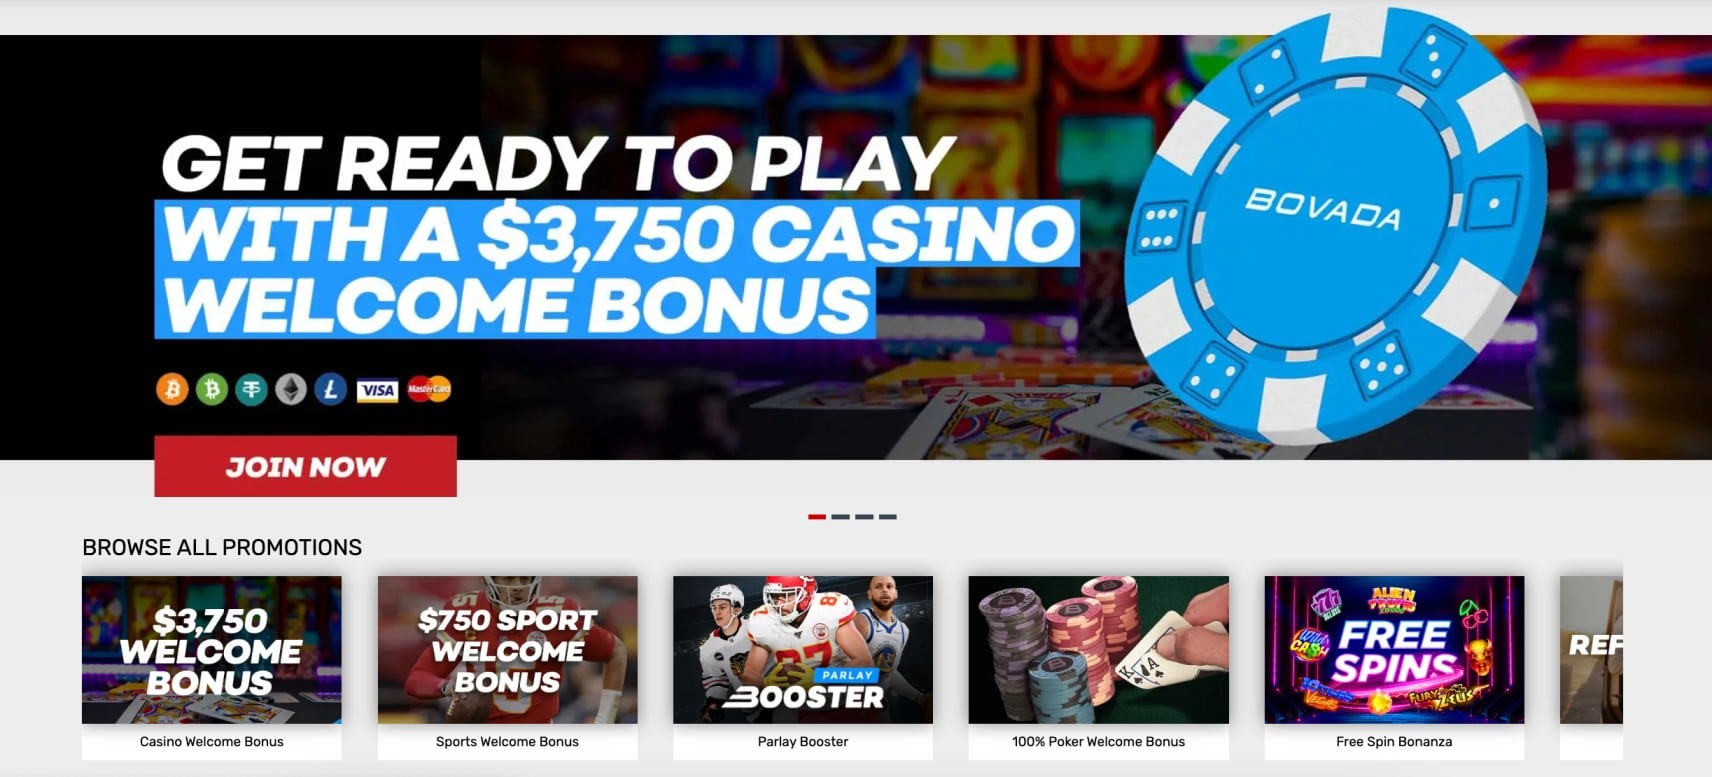 Bovada Casino Welcome Bonus Offers